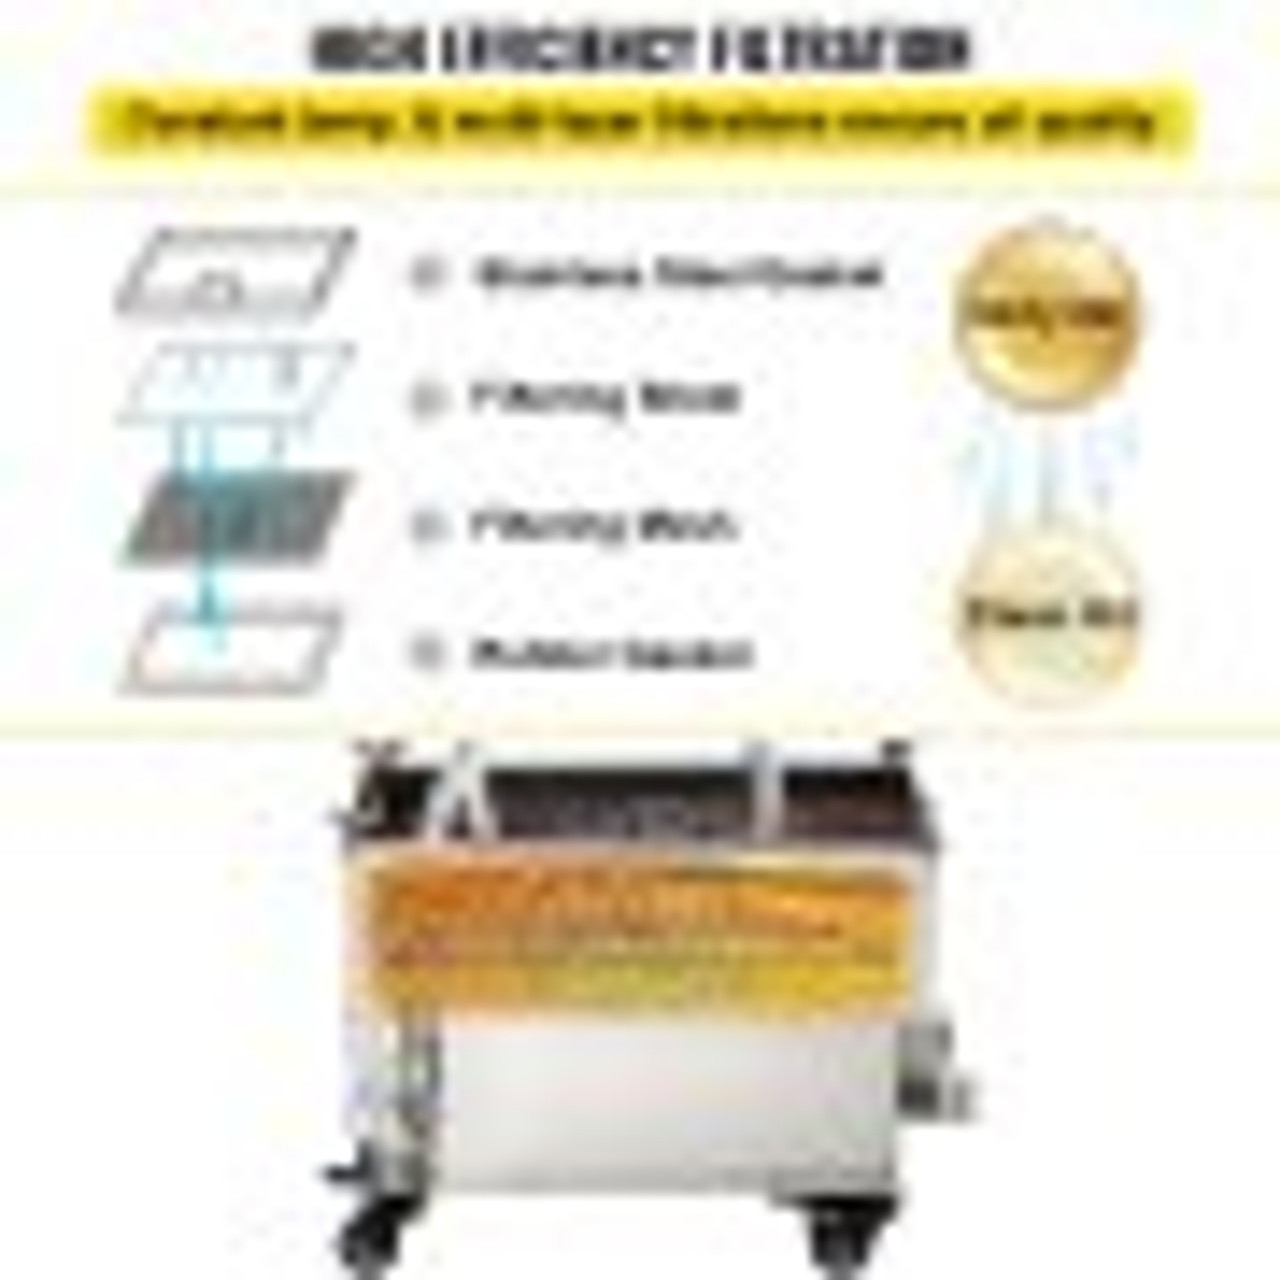 Mobile Fryer Filter, 44 LBS/22 L/5.8 Gal Capacity, 300W Oil Filtration System with 5 L/min Flow Rate, Mobile Frying Oil Filtering System with 10 L/min Pump & Oil Hose, 110V/60Hz